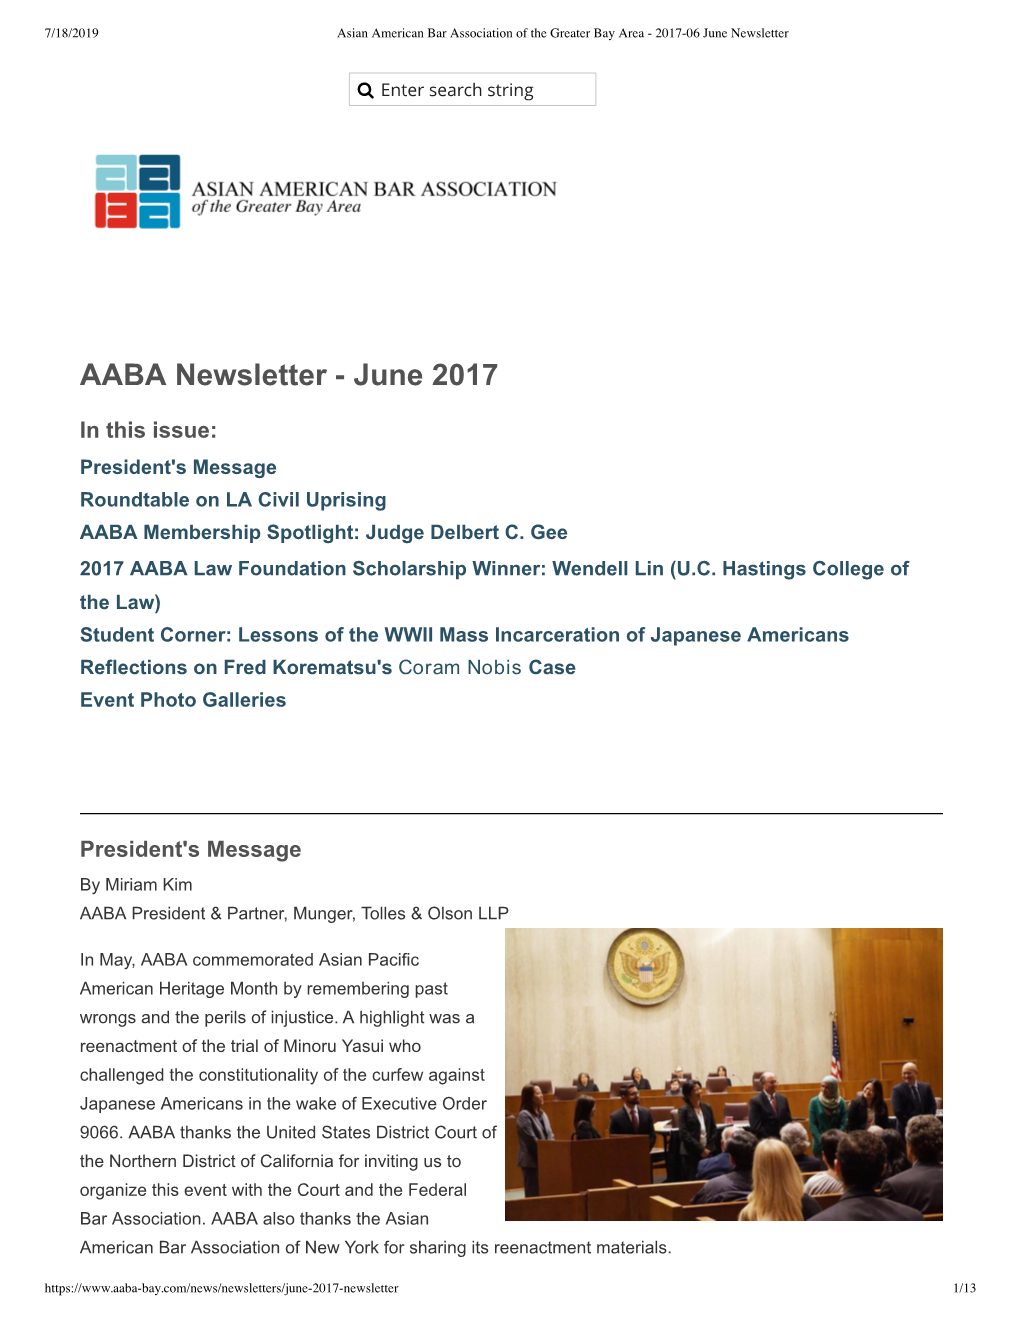 AABA Newsletter - June 2017